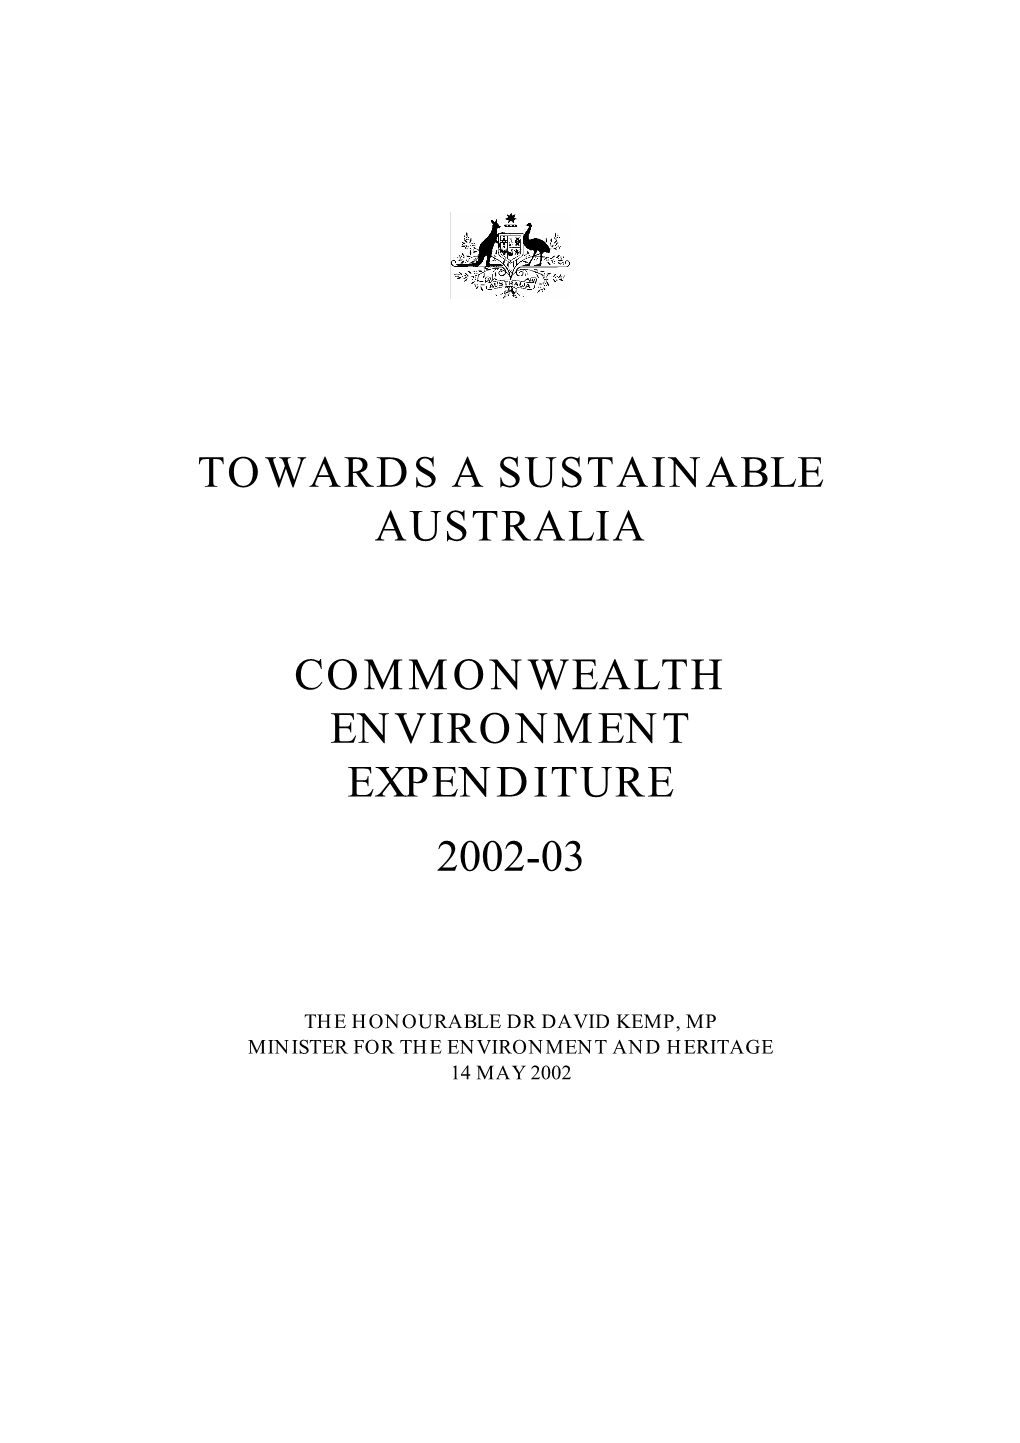 Towards a Sustainable Australia Commonwealth